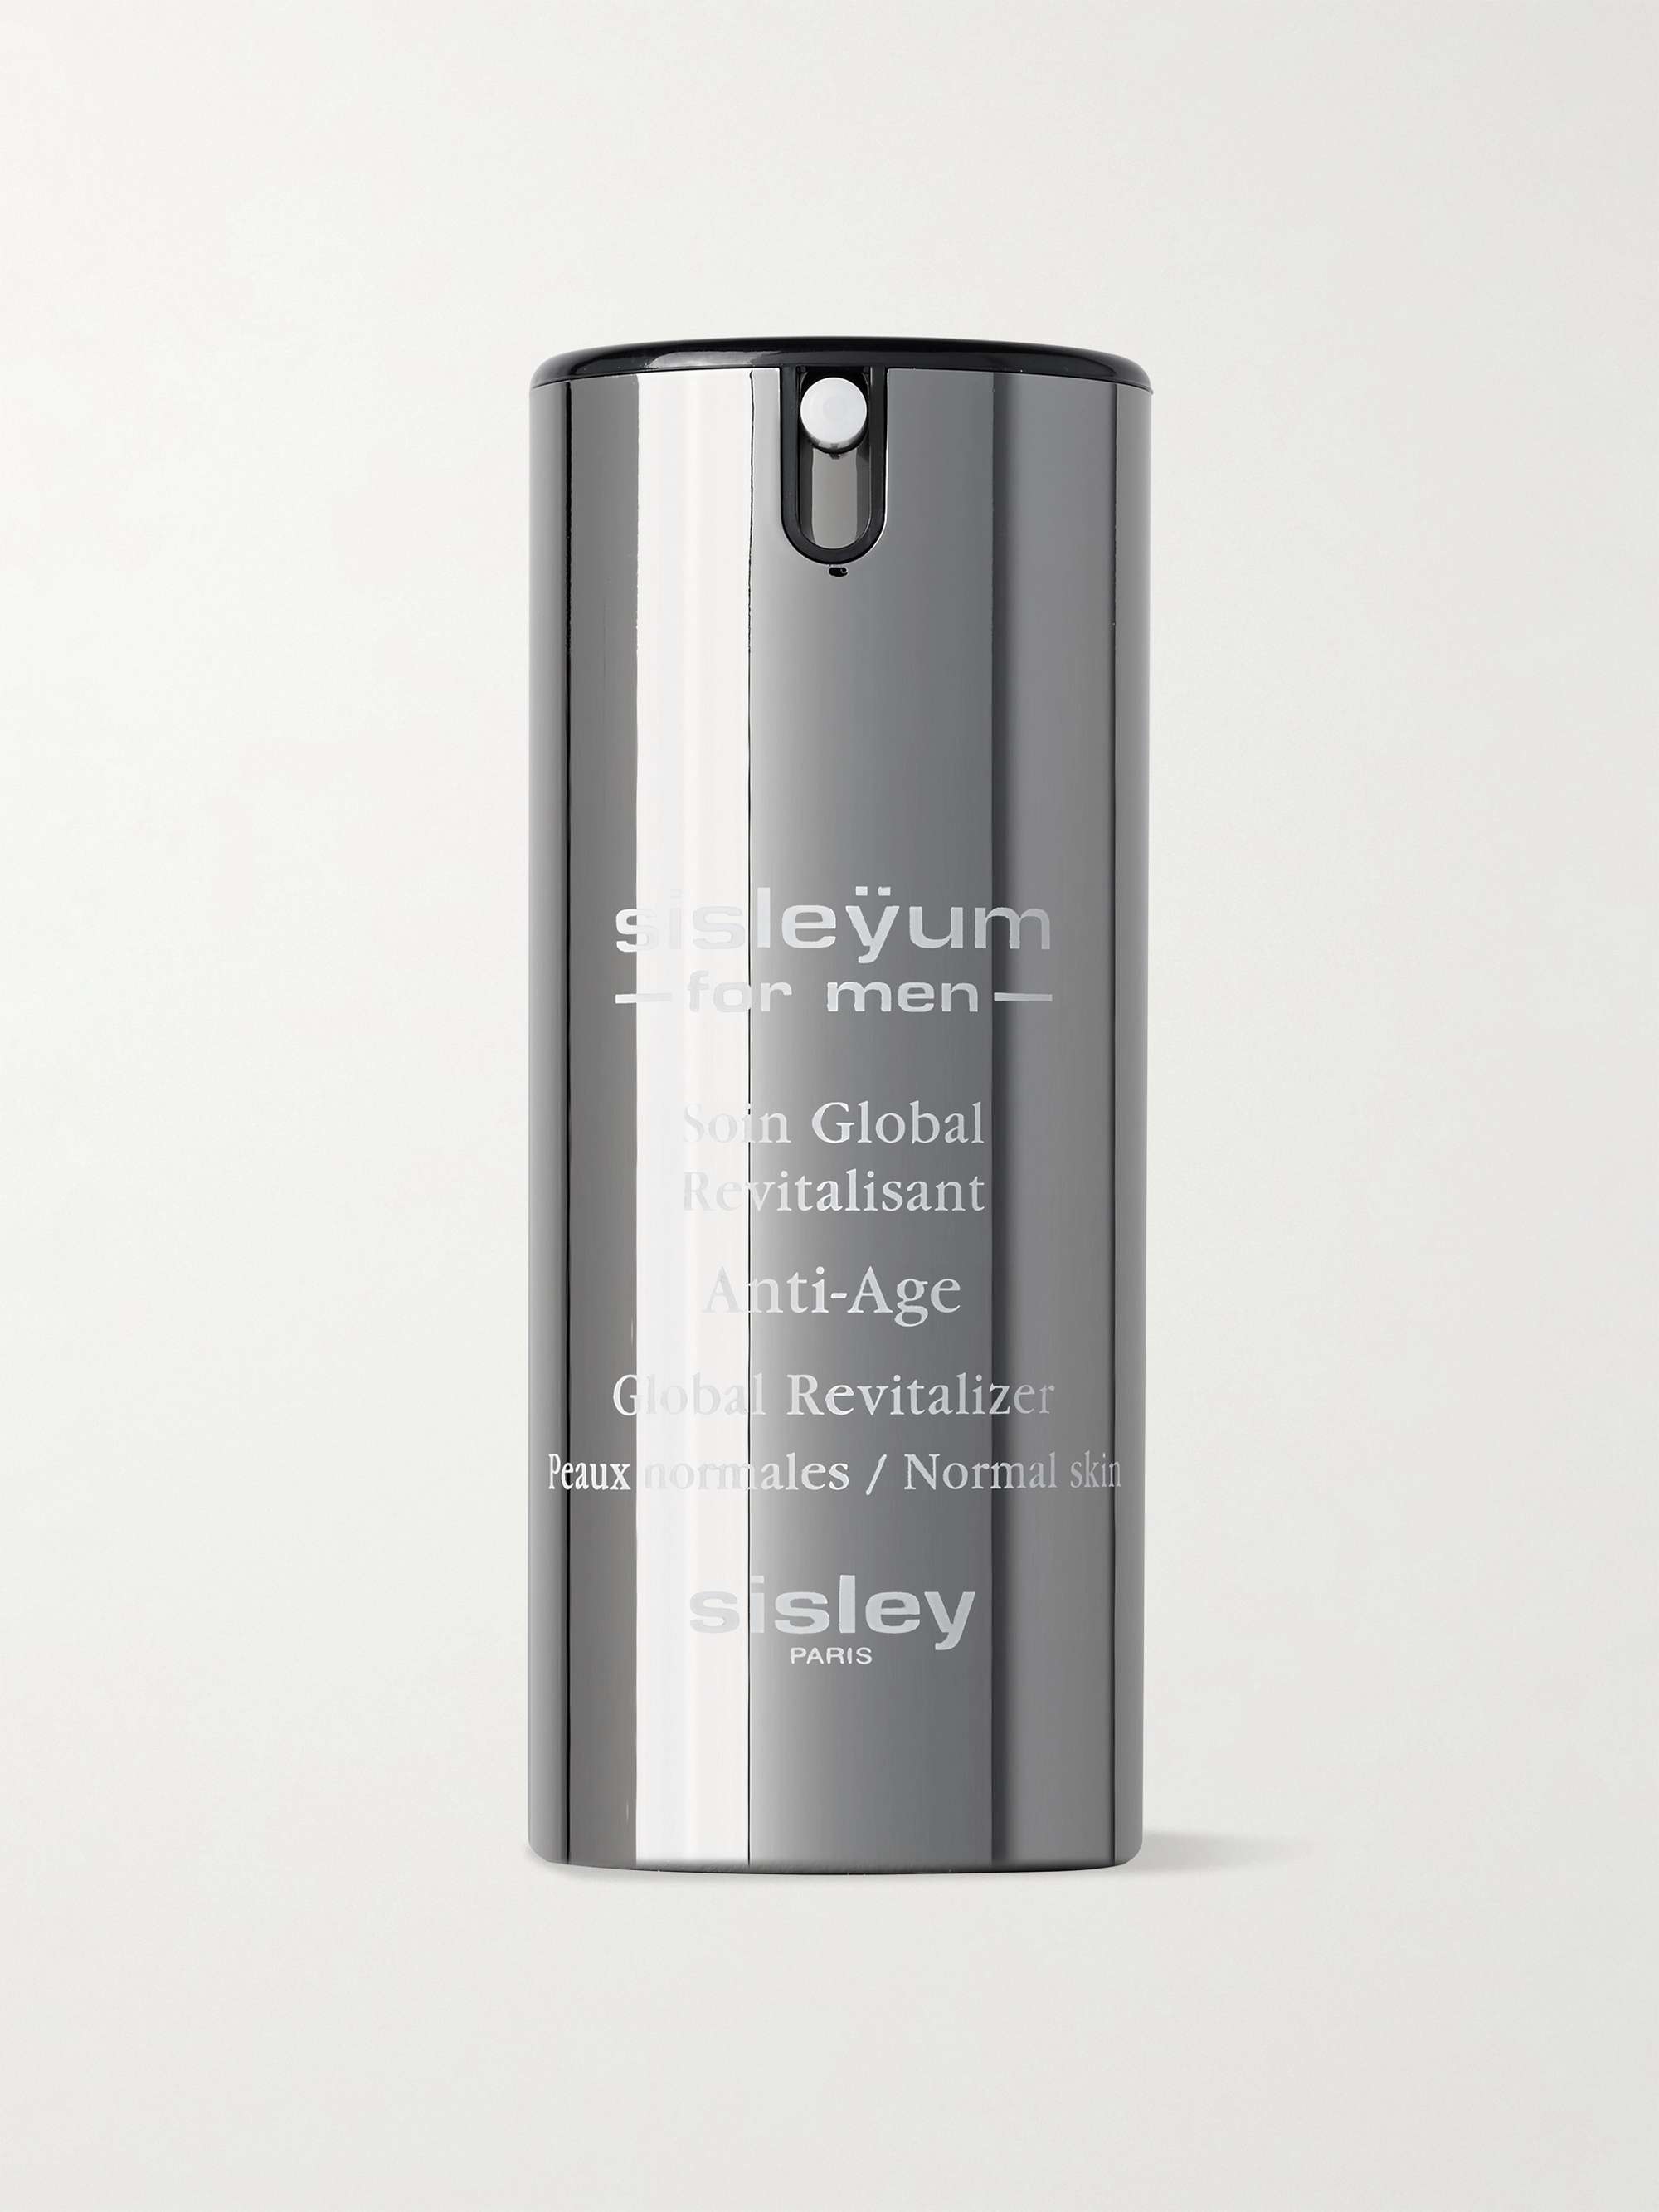 SISLEY Sisleÿum Anti-Age for Normal Skin, 50ml